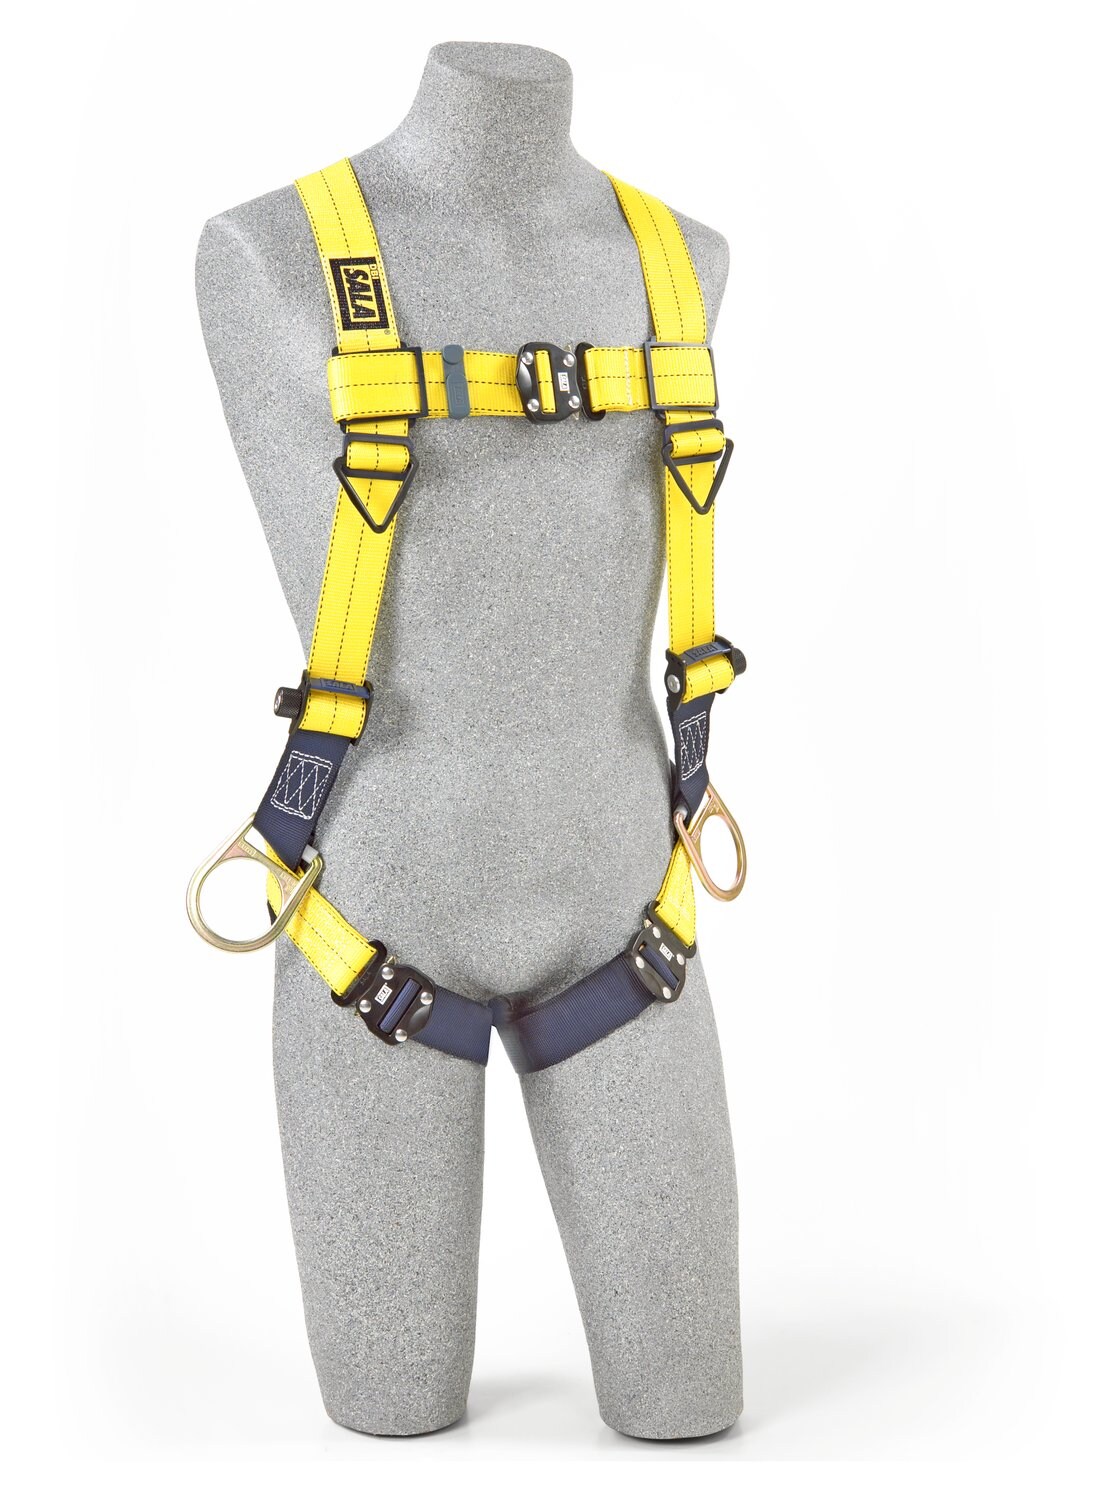 7012815731 - 3M DBI-SALA Delta Vest Positioning Safety Harness 1110626, X-Large